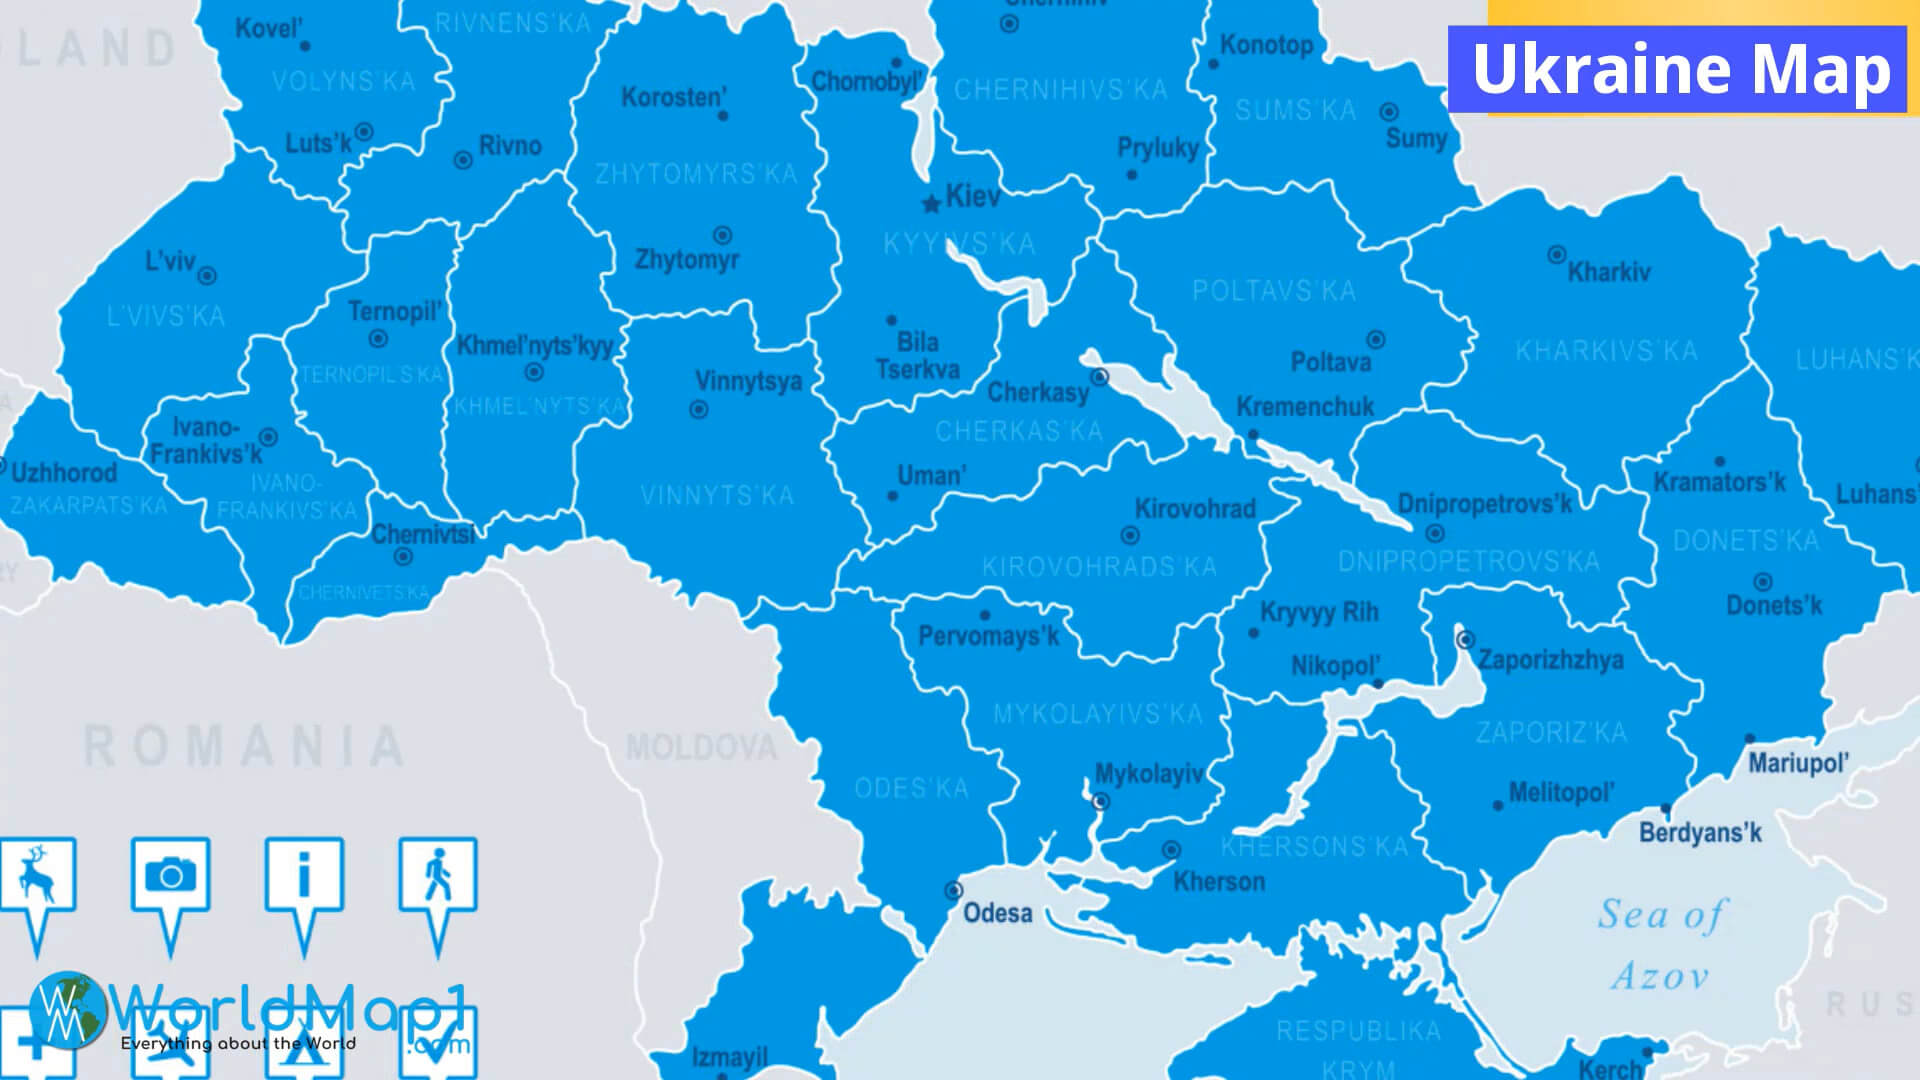 Where is Lviv in Ukraine